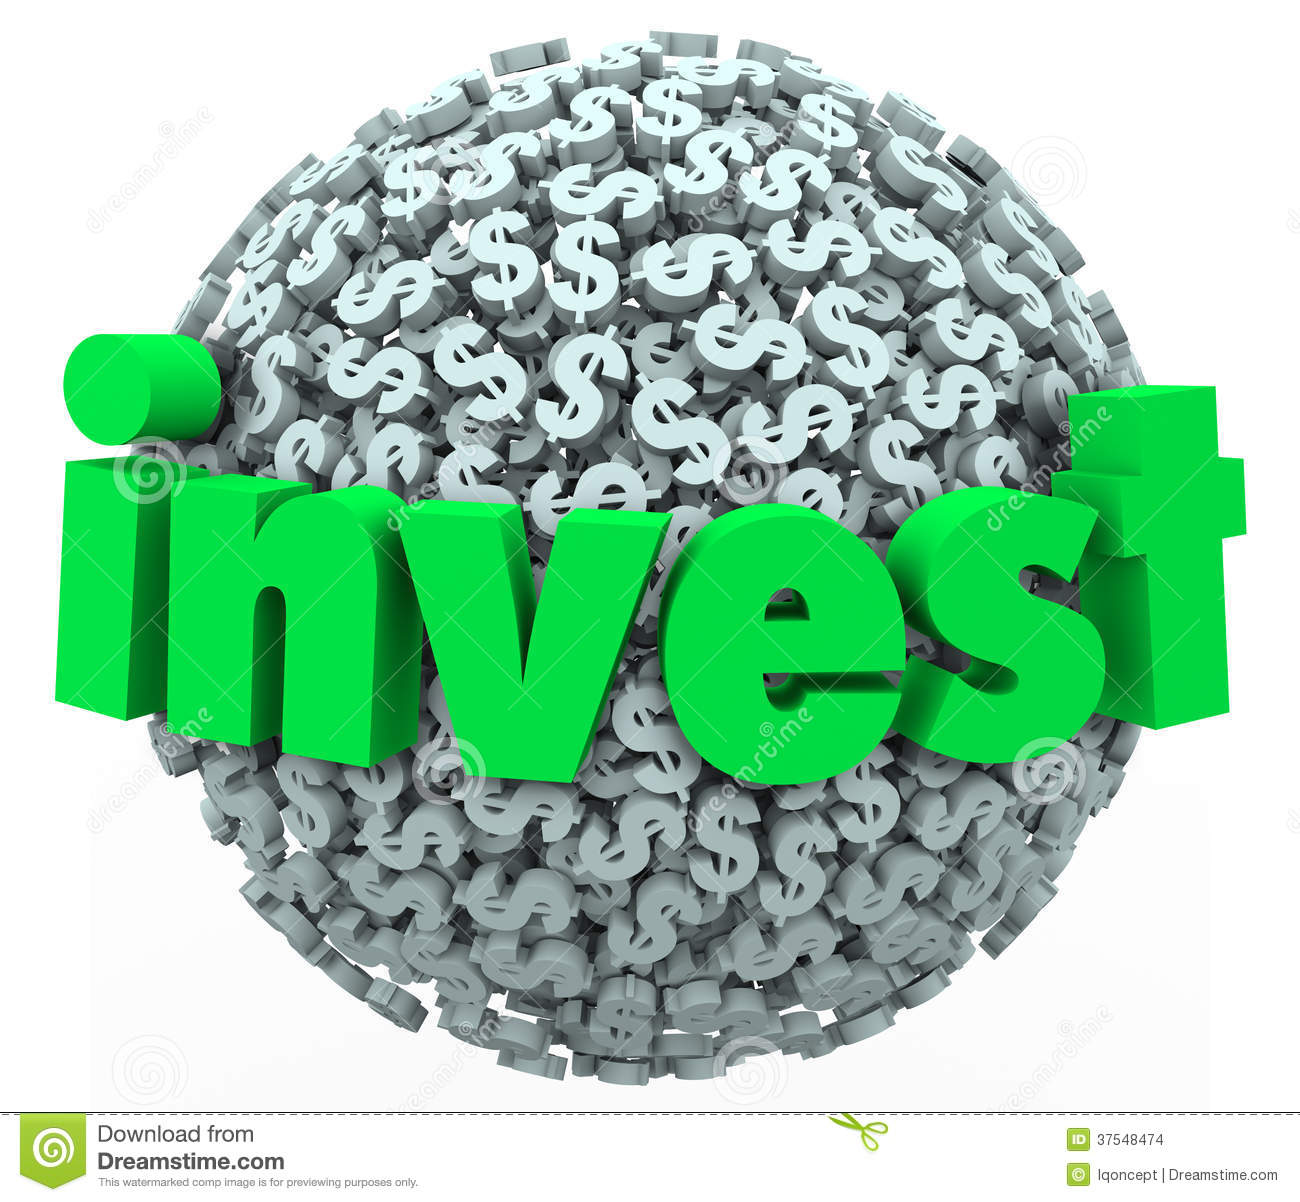     Images  Invest Word Dollar Sign Sphere Stock Market Bond 401k Savings